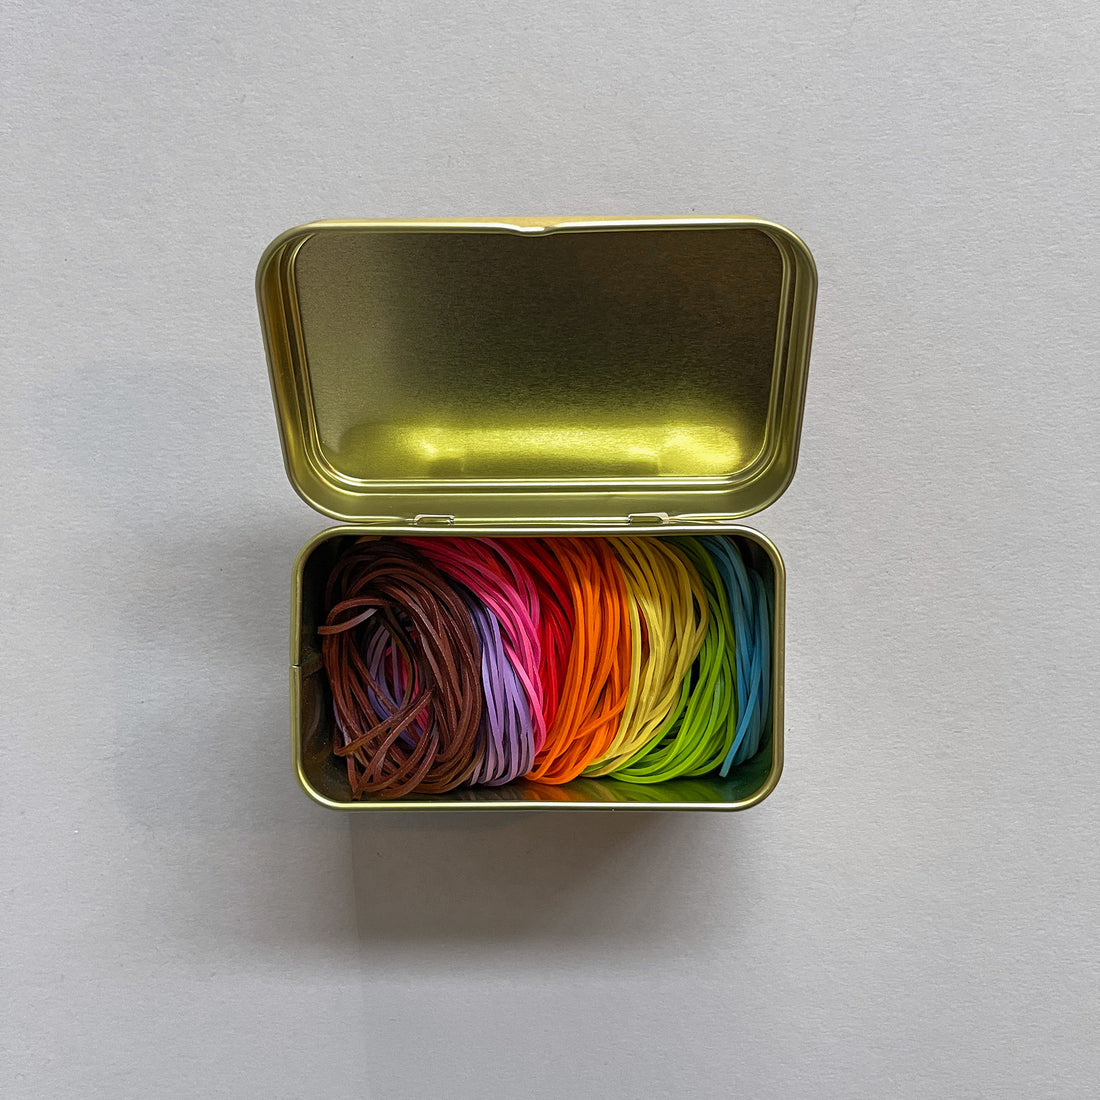 Kyowa O'Band Pure Rubber Bands - Multicolor